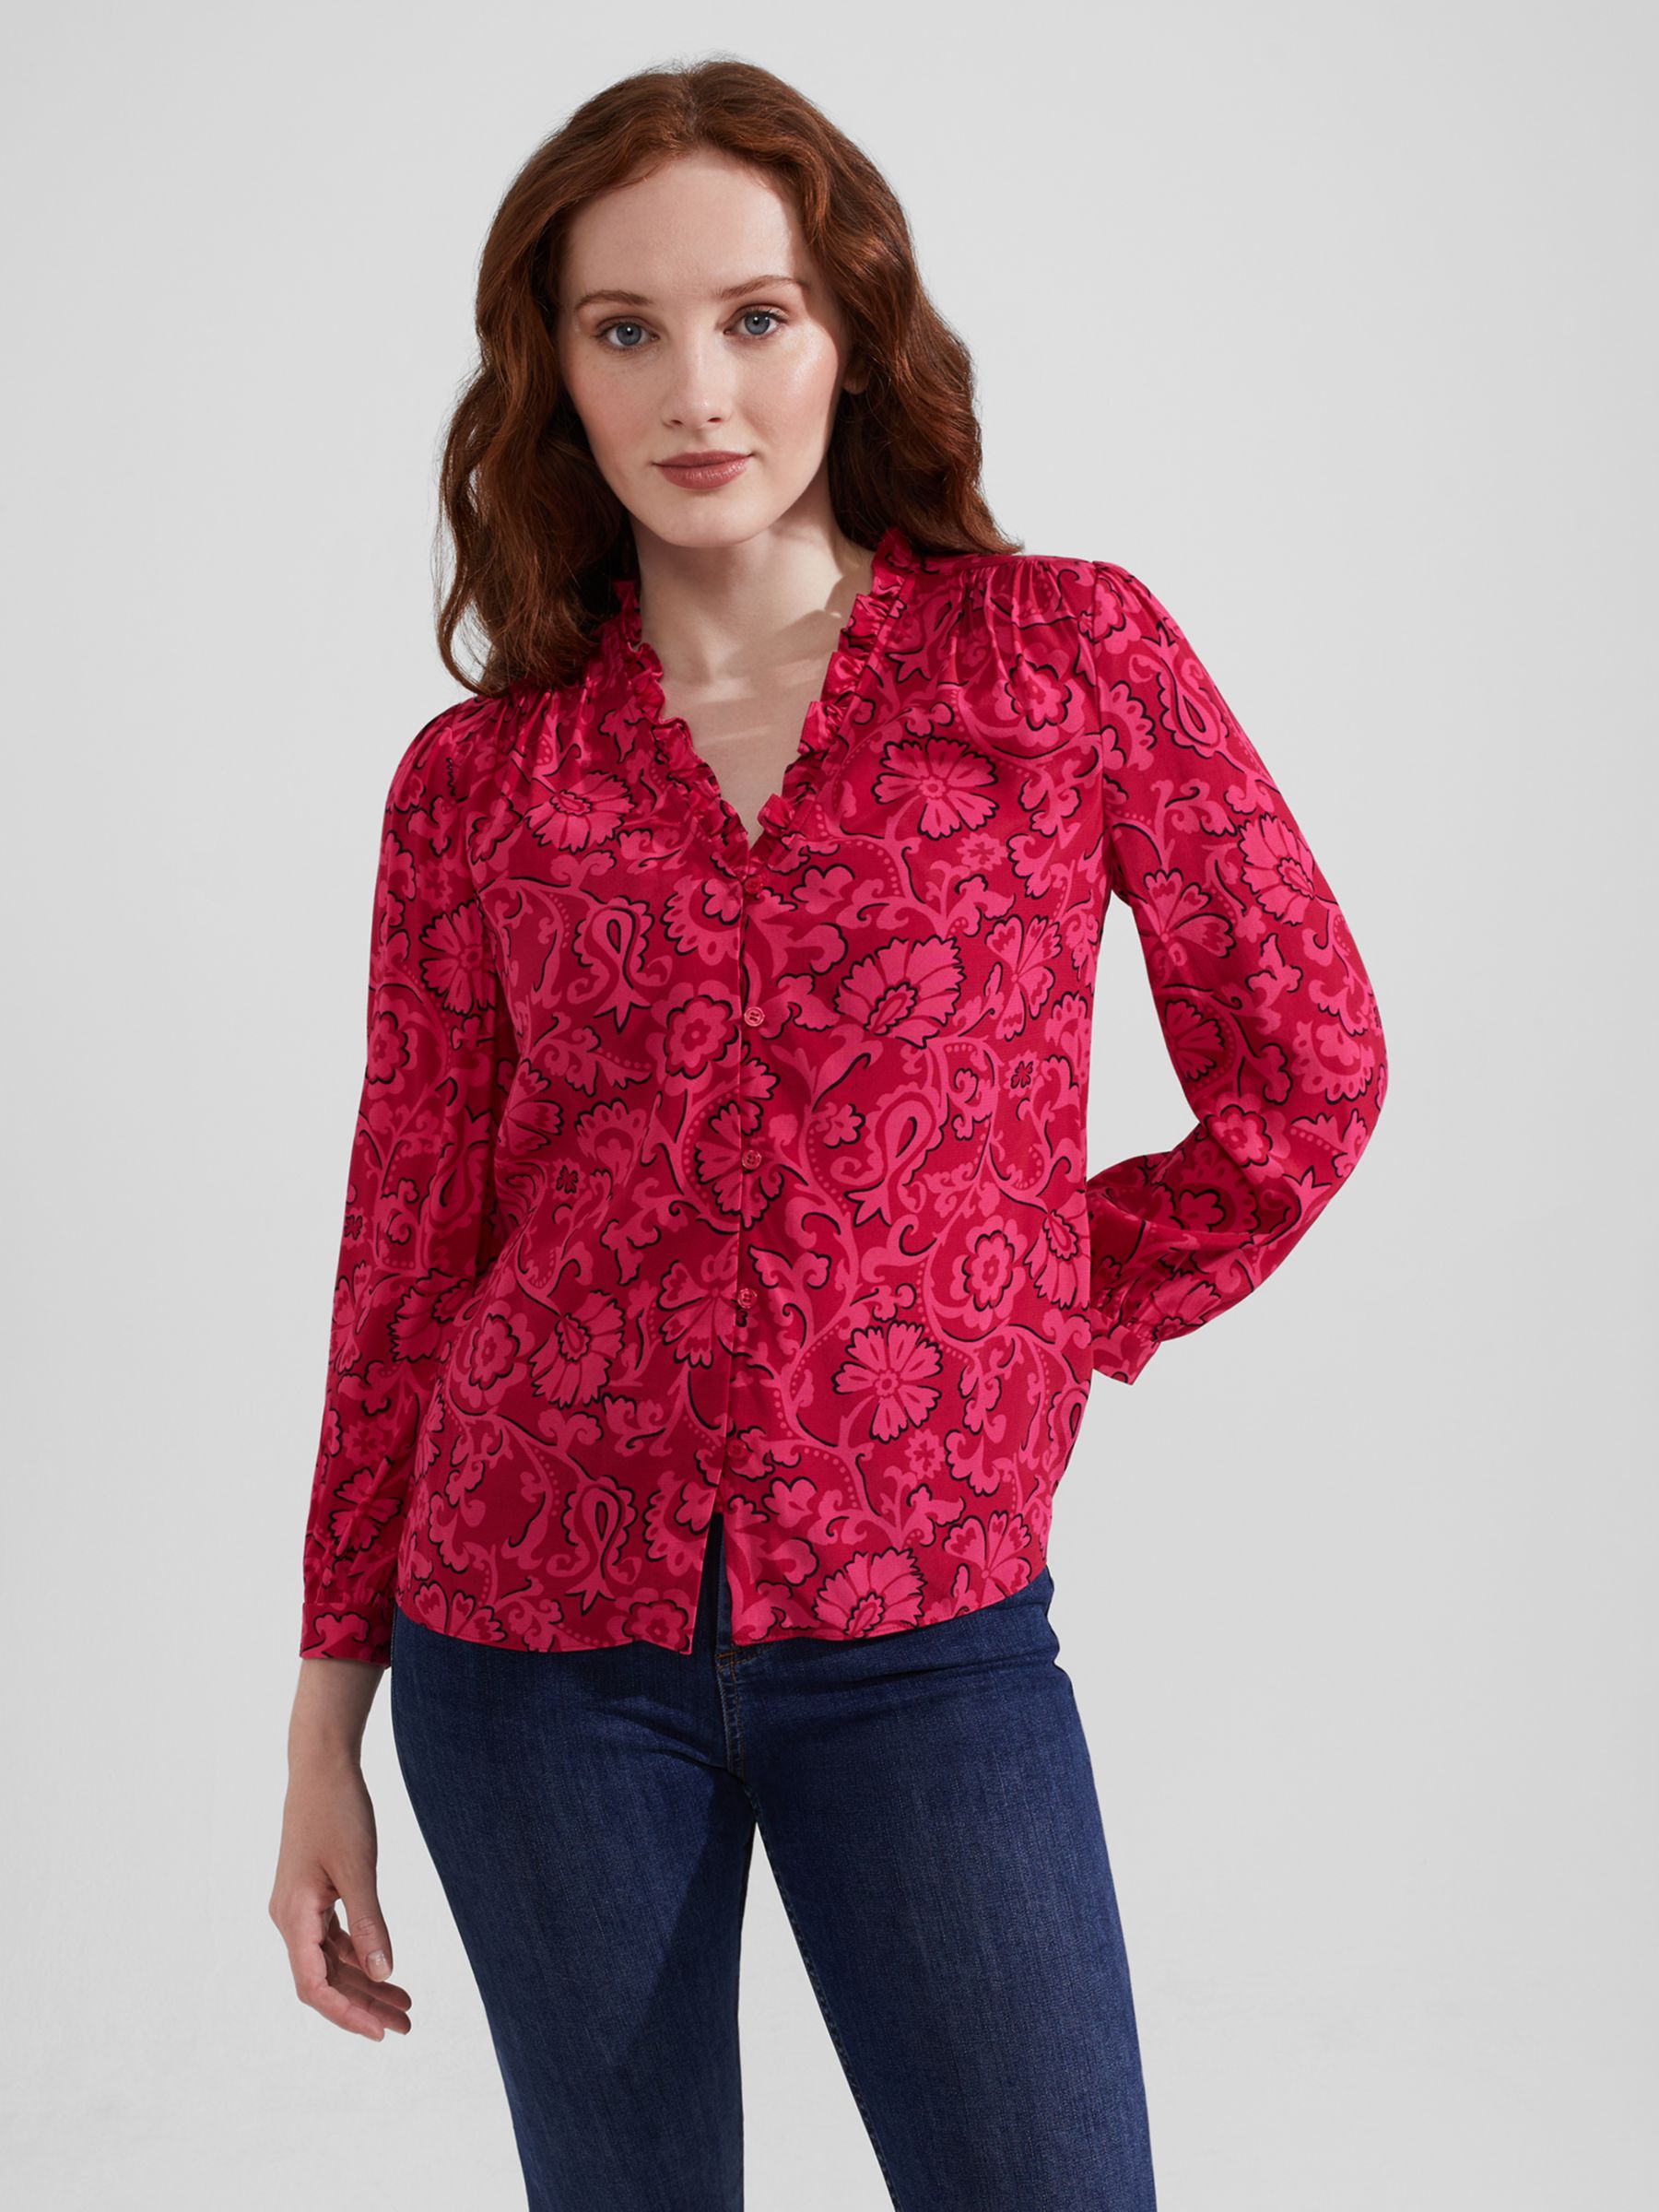 Hobbs Gloria Floral Frill Trim Shirt, Red/Pink at John Lewis & Partners